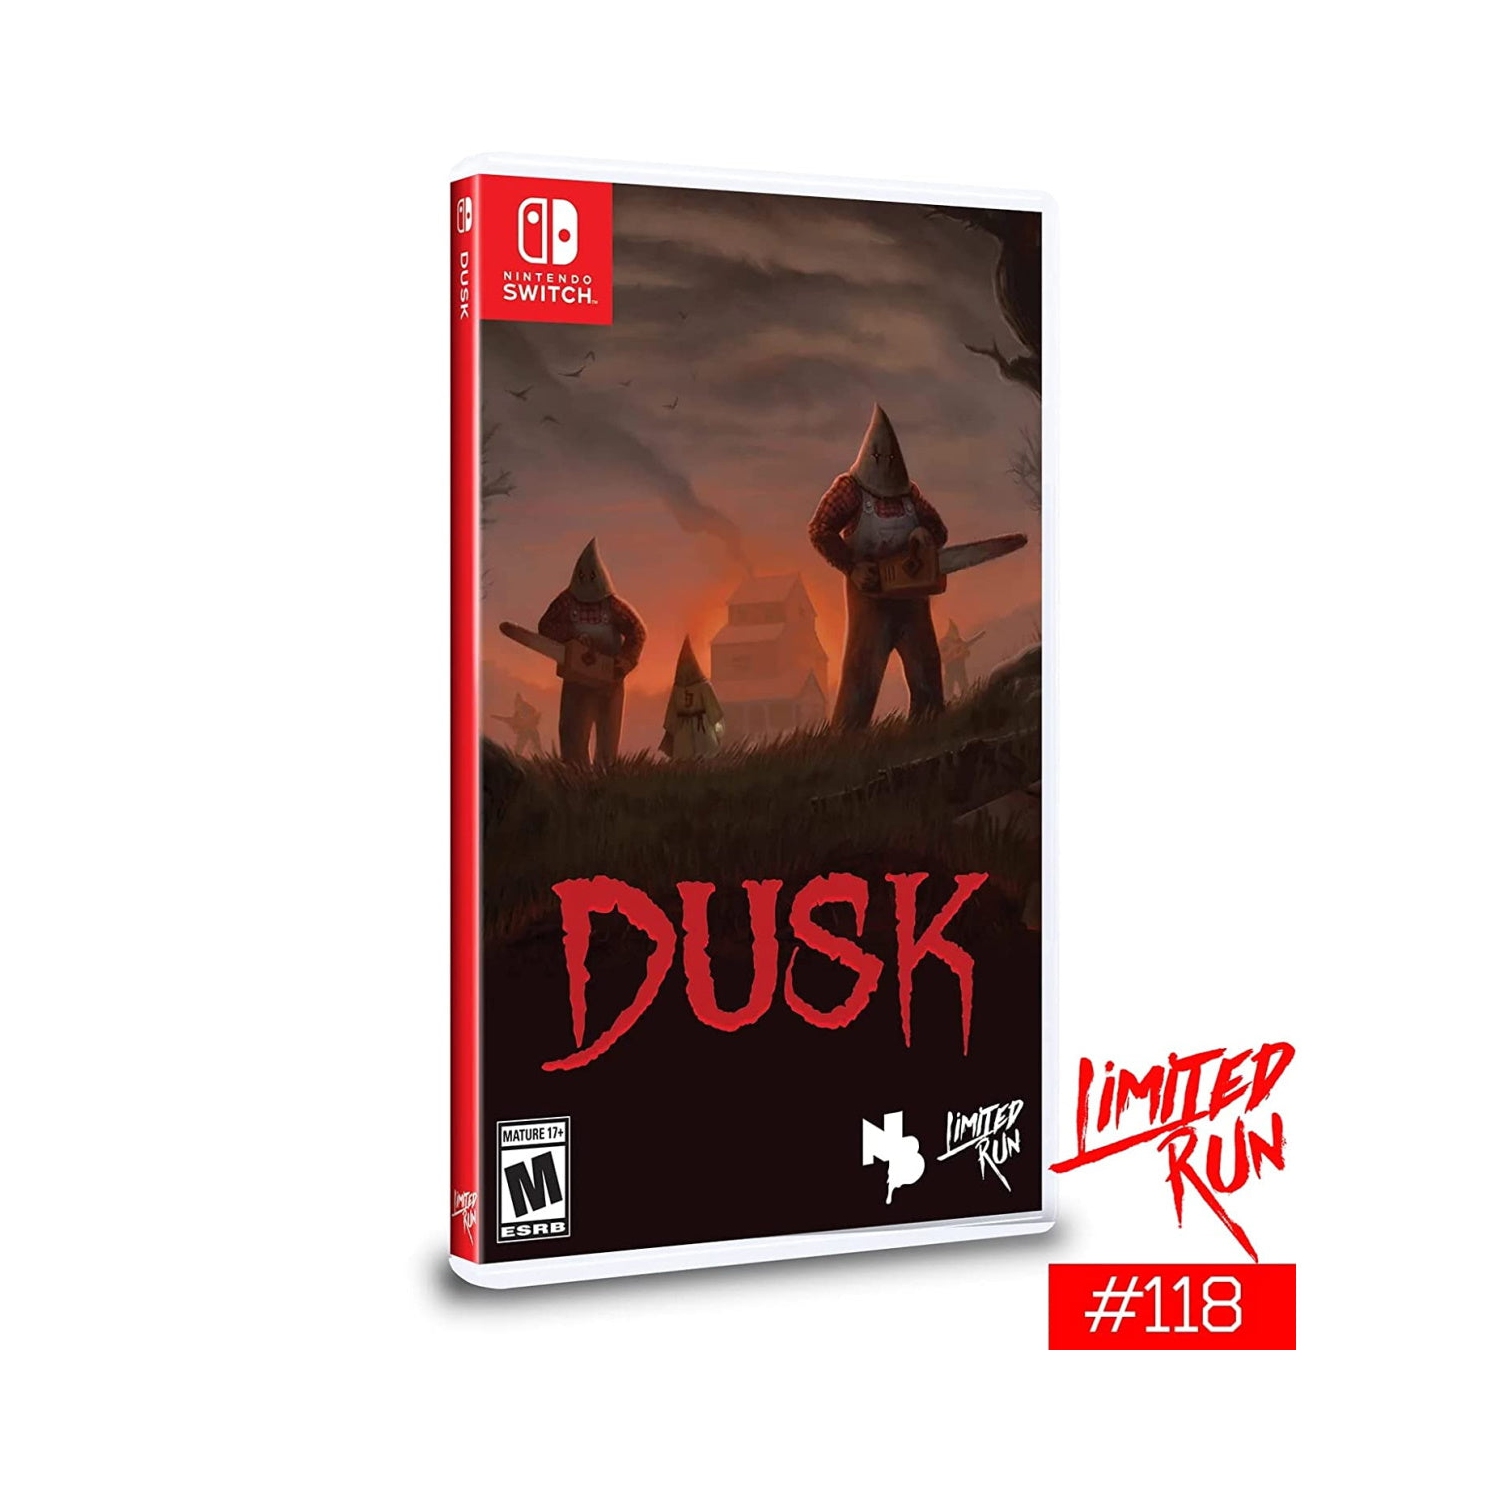 Dusk - Limited Run #118 [Nintendo Switch]